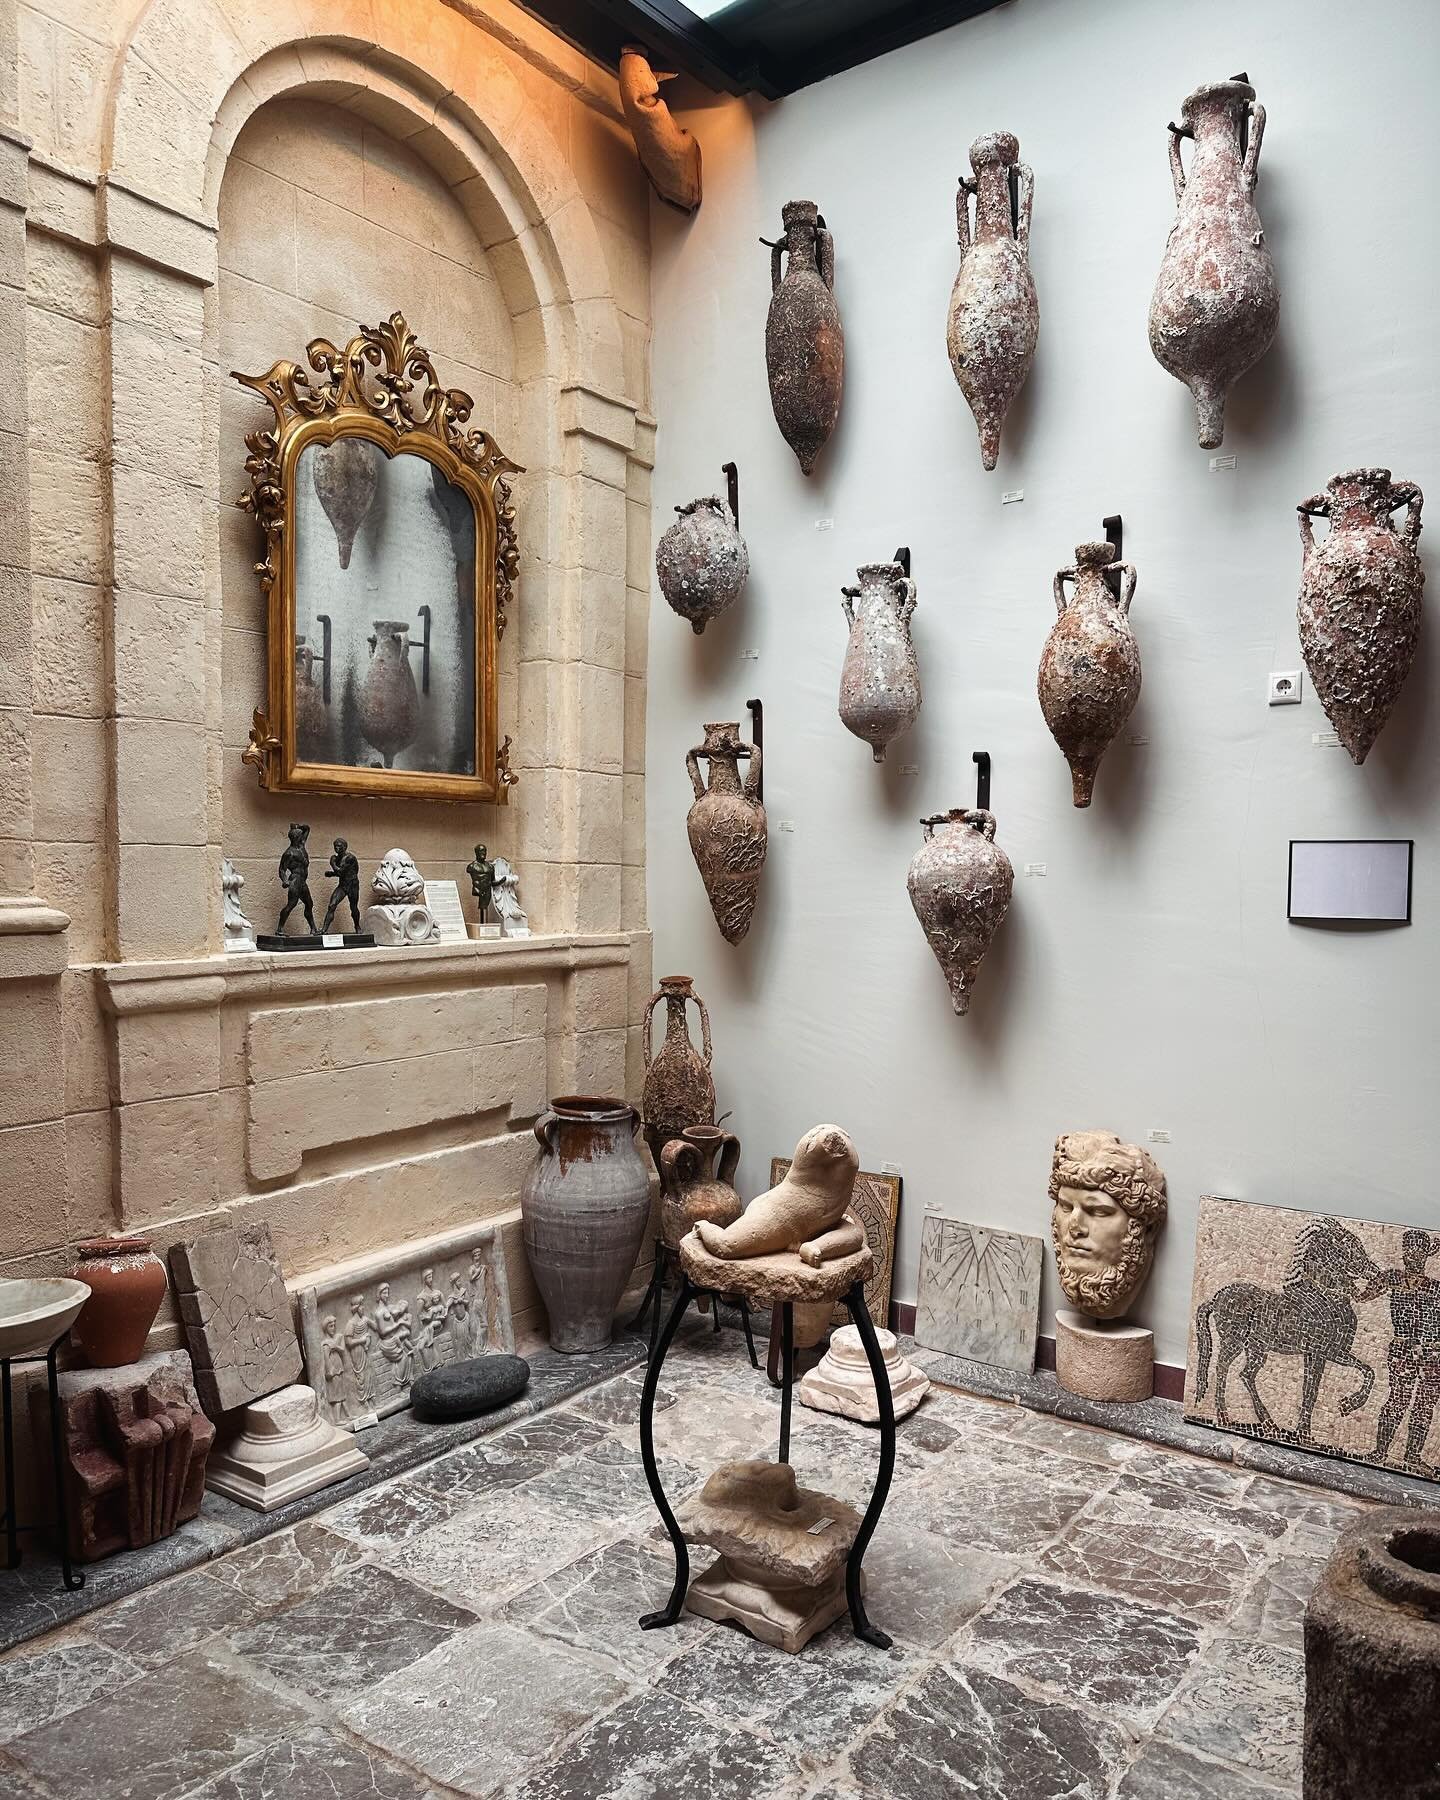 Herakles, Cadiz

#ceramics #archaeology #ancienthistory